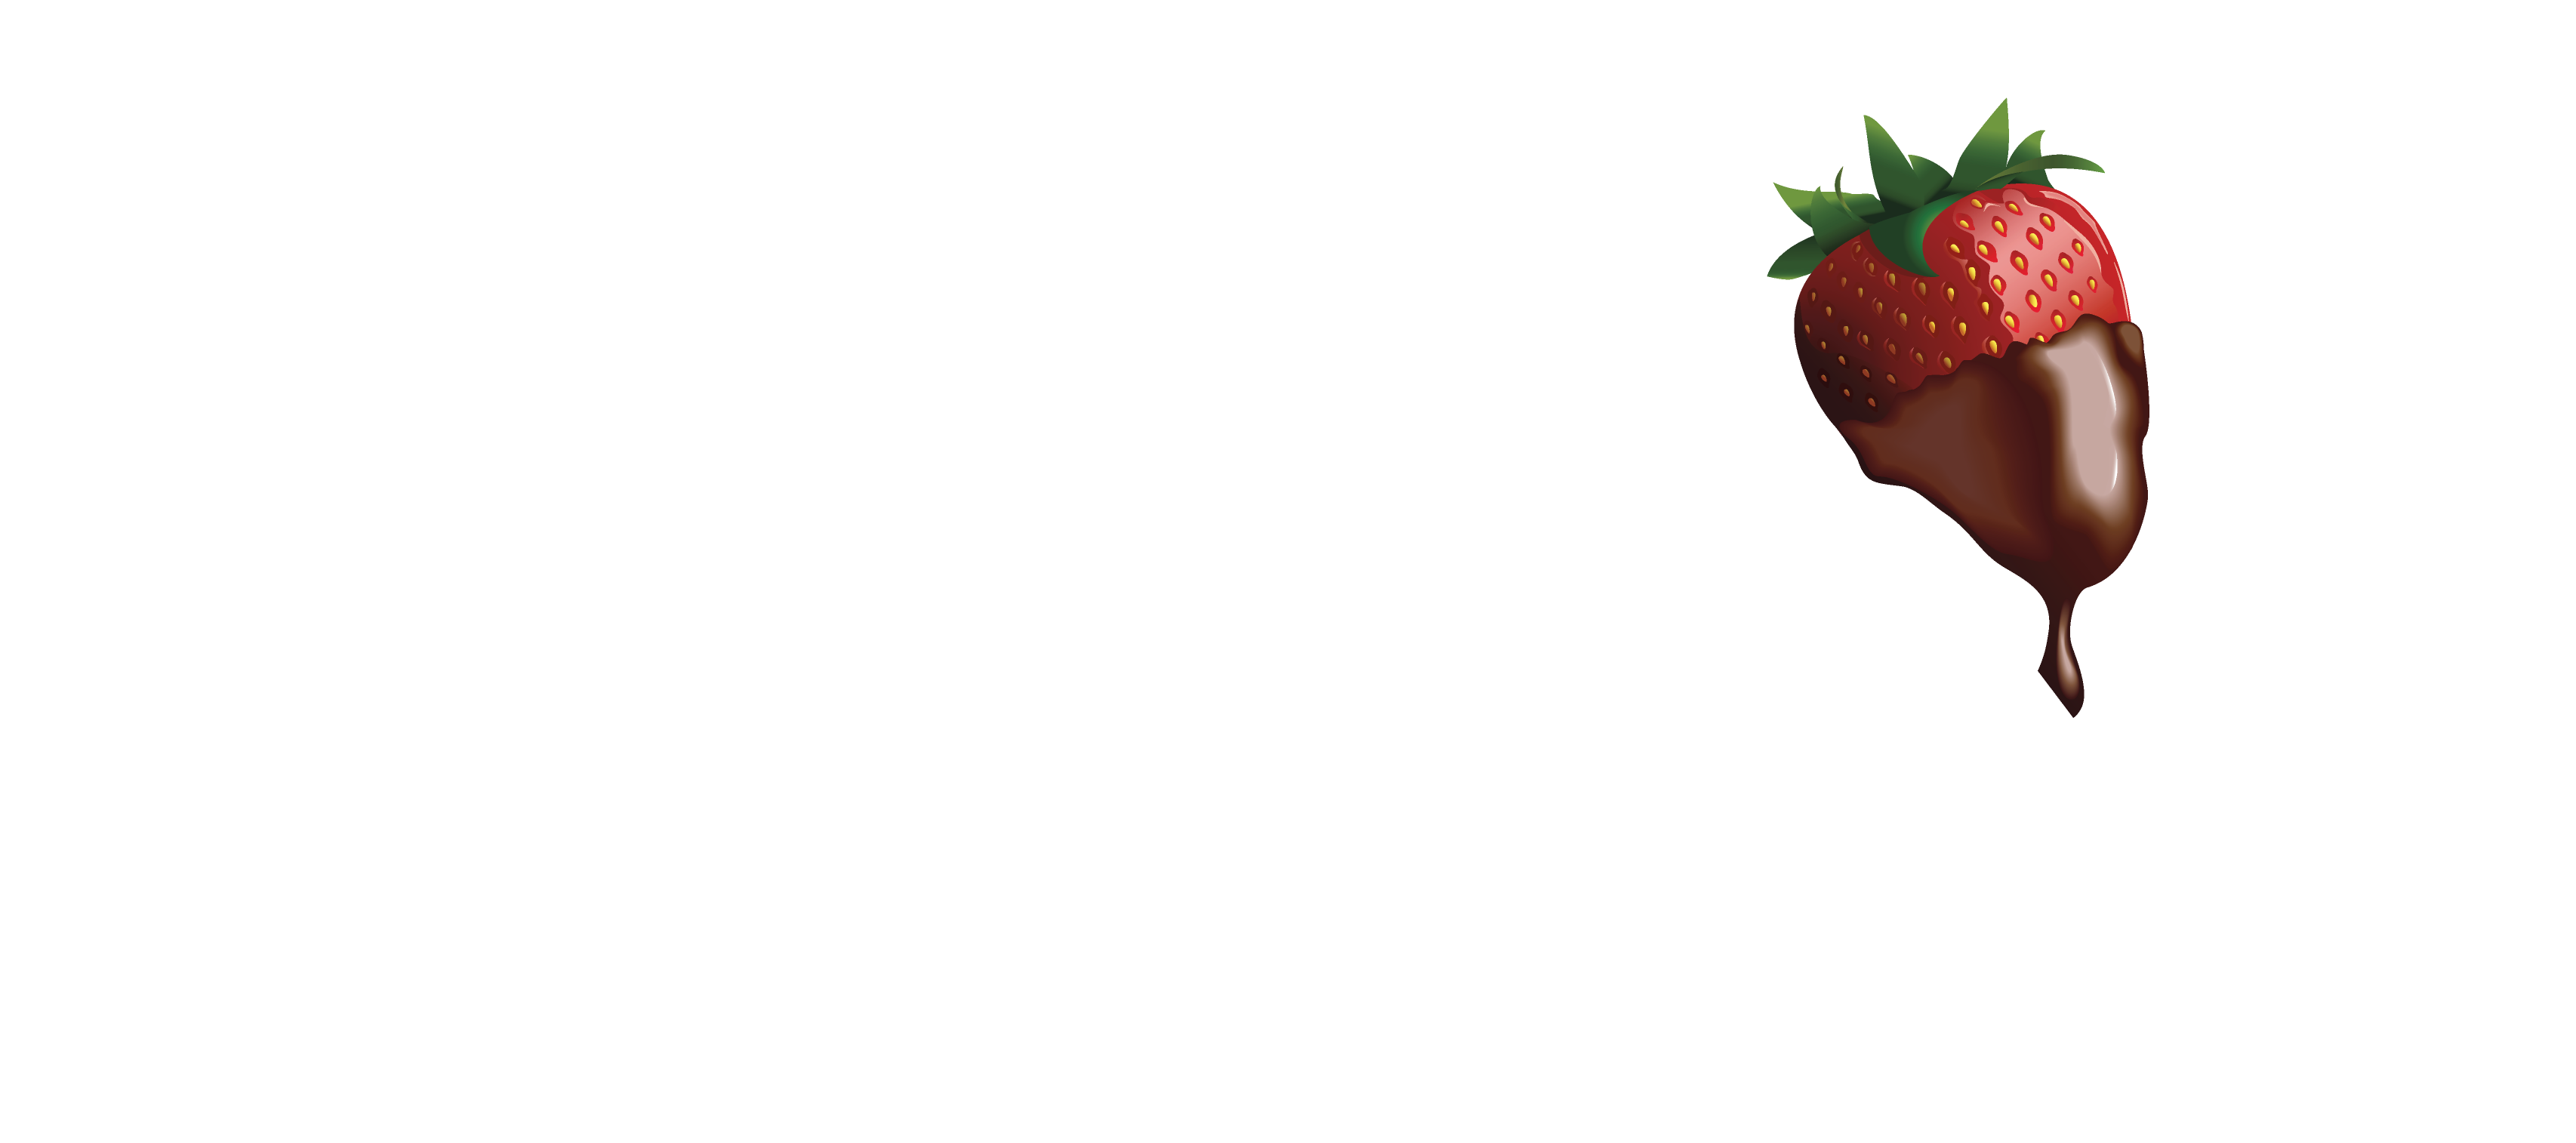 Fort Wayne Chocolate Fountain